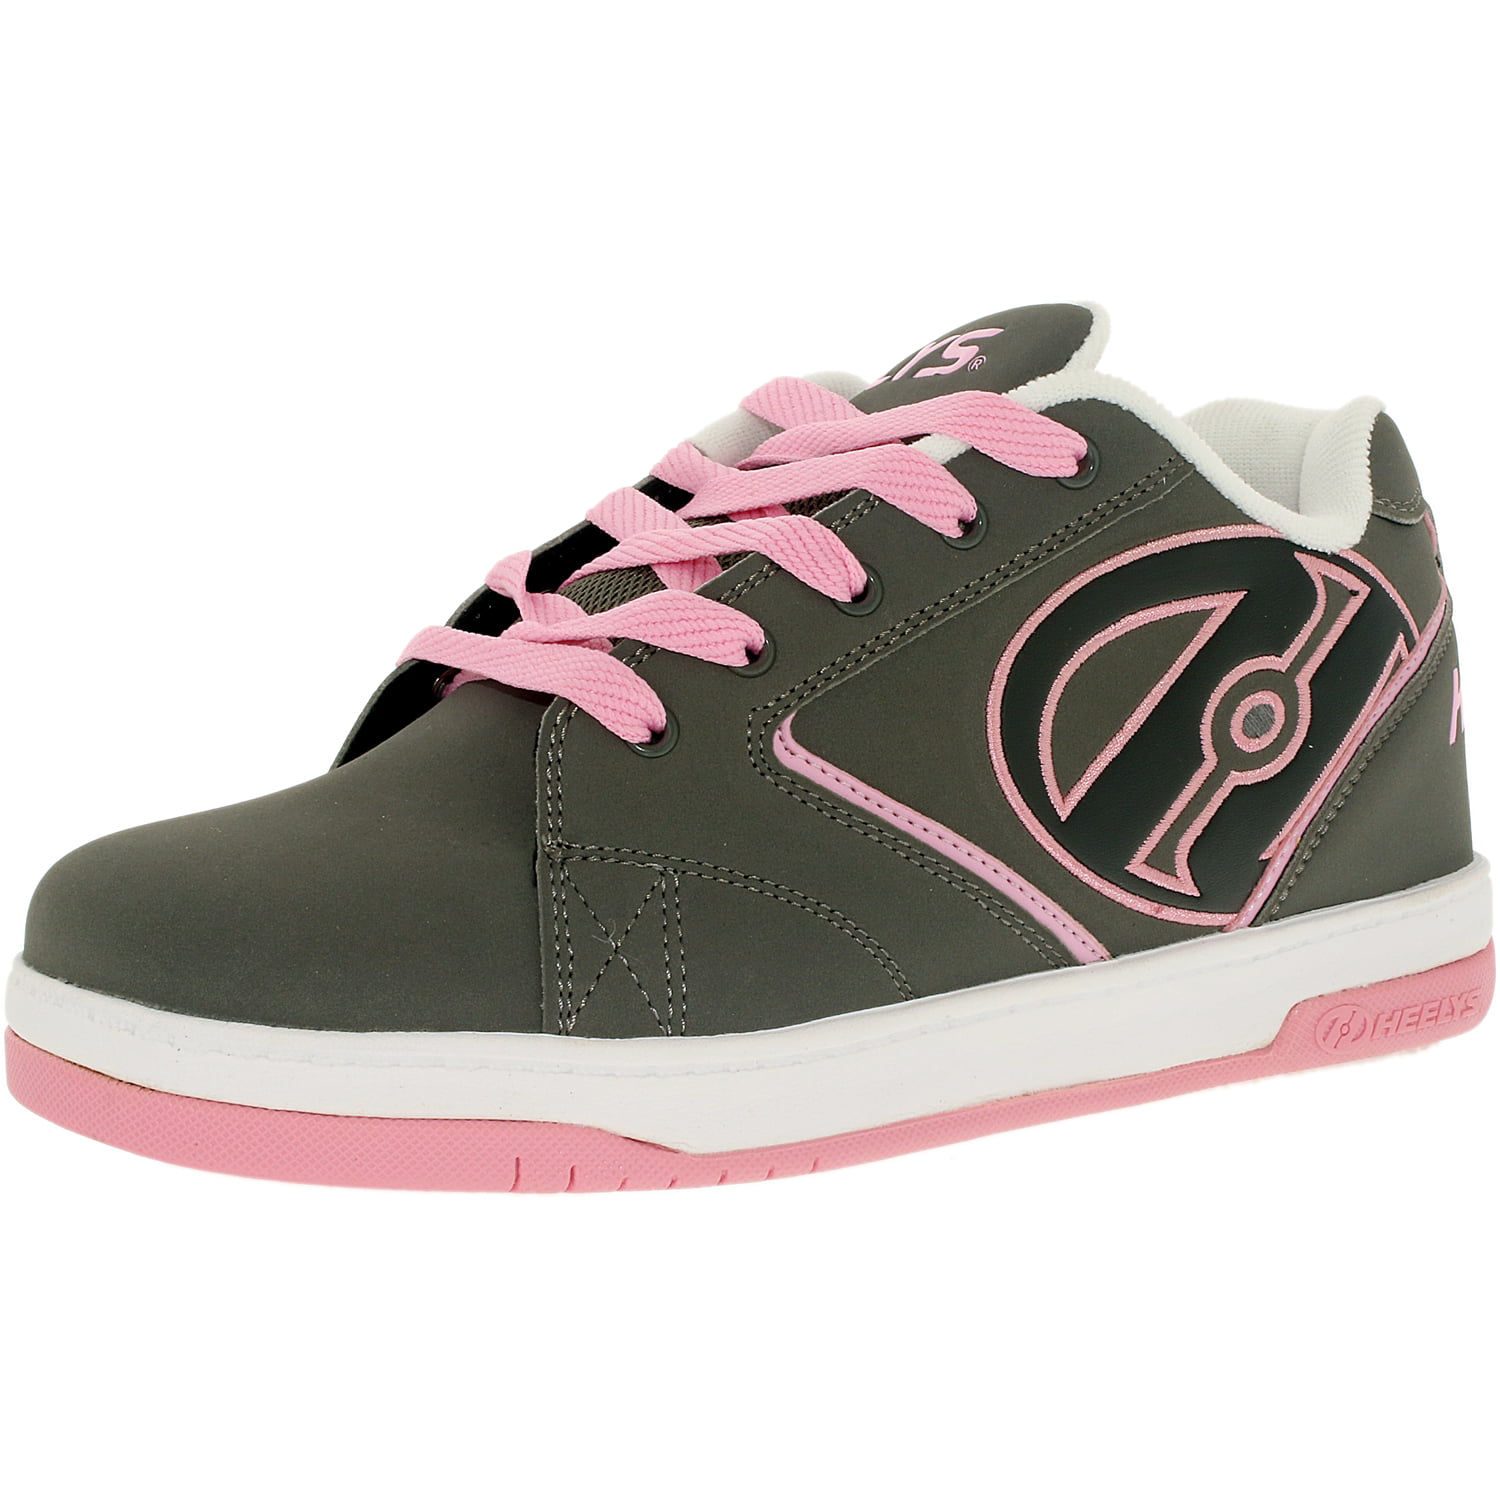 Heelys heelys size 1 pink grey and white 